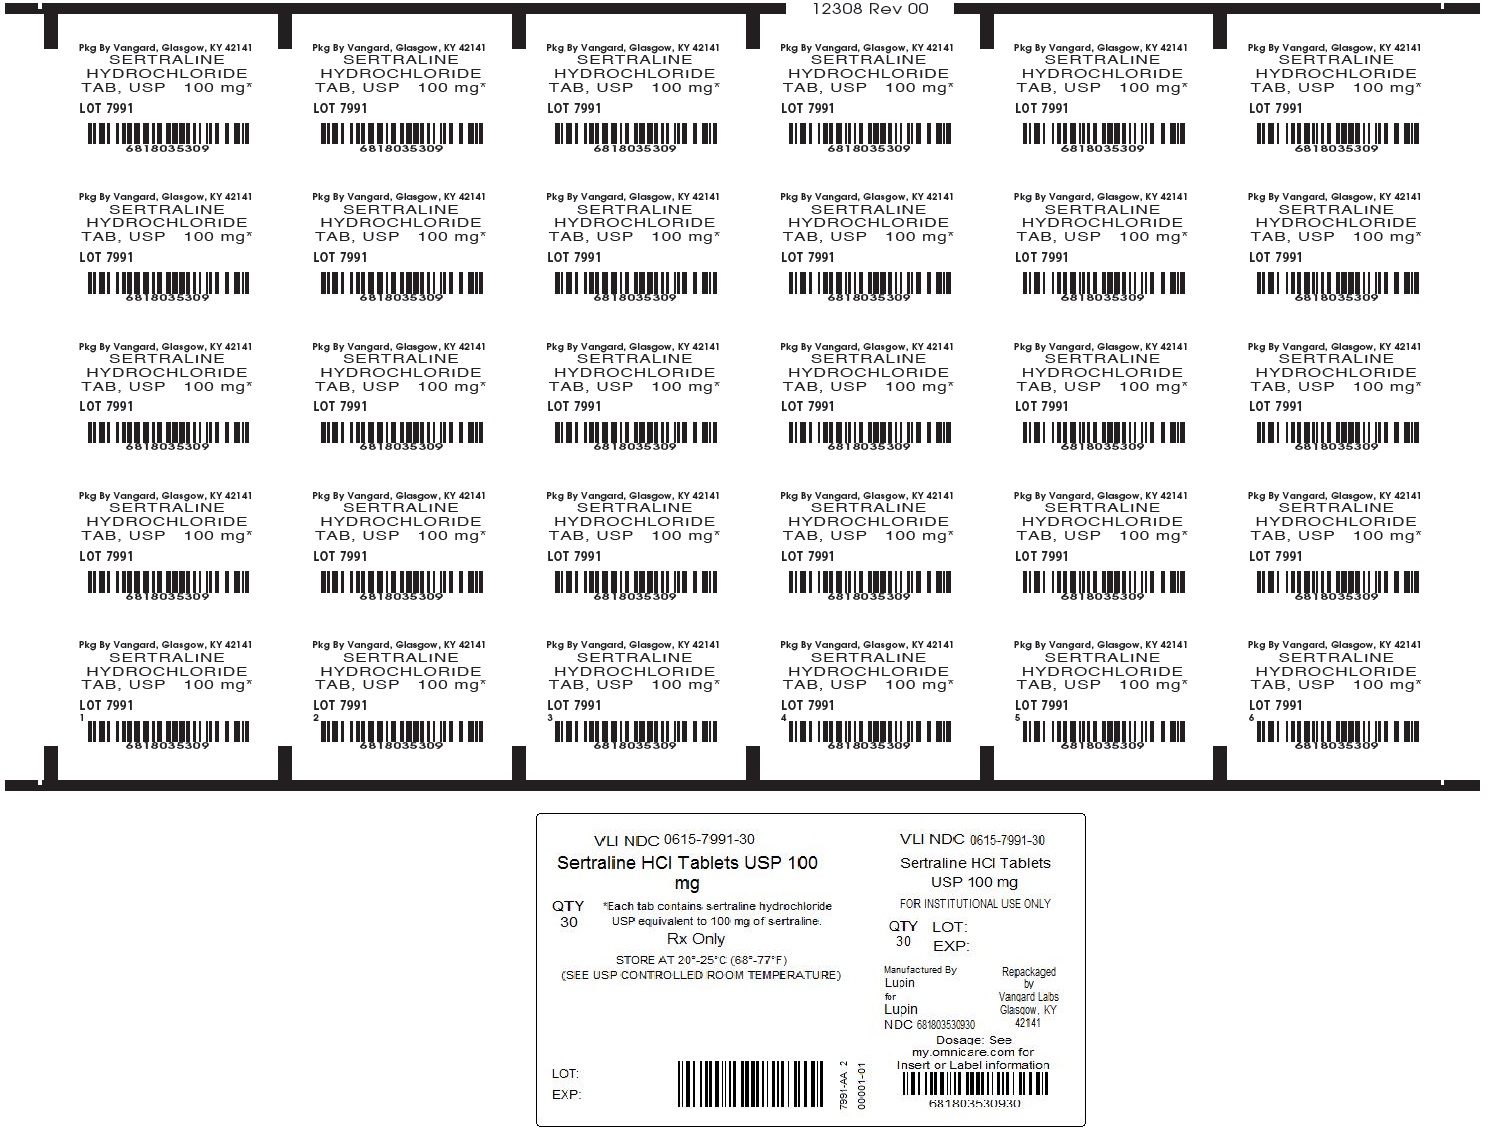 Sertraline 100mg Tabs Unit dose box label